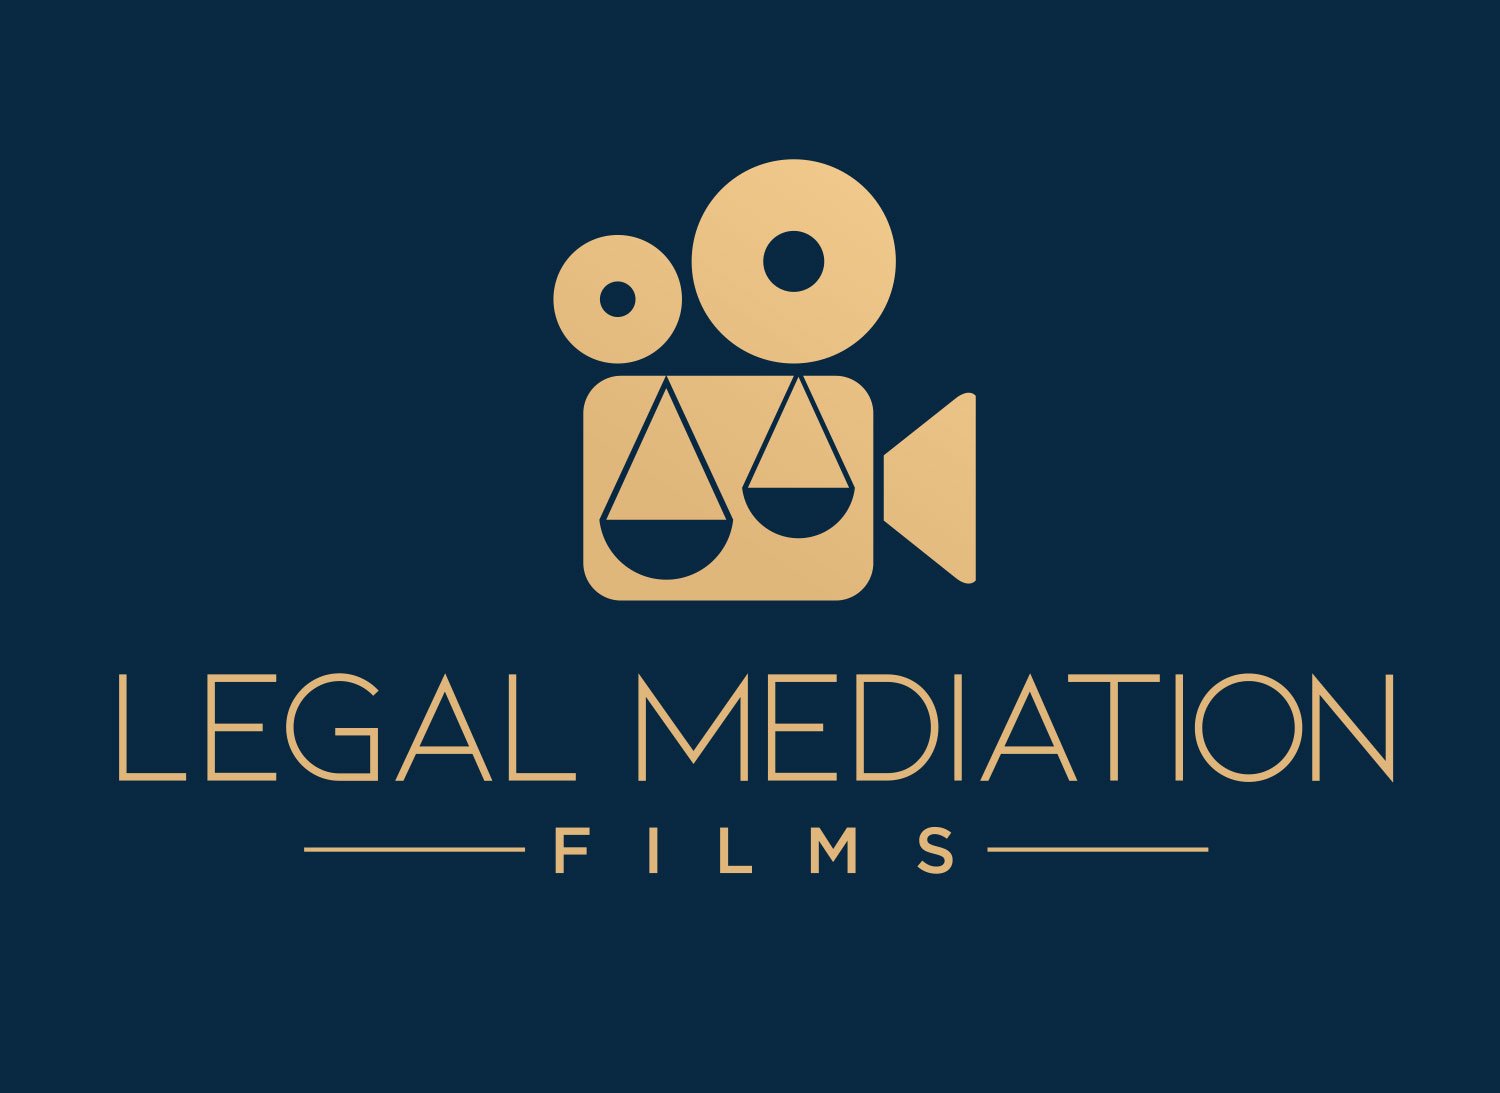 LEGAL MEDIATION FILMS